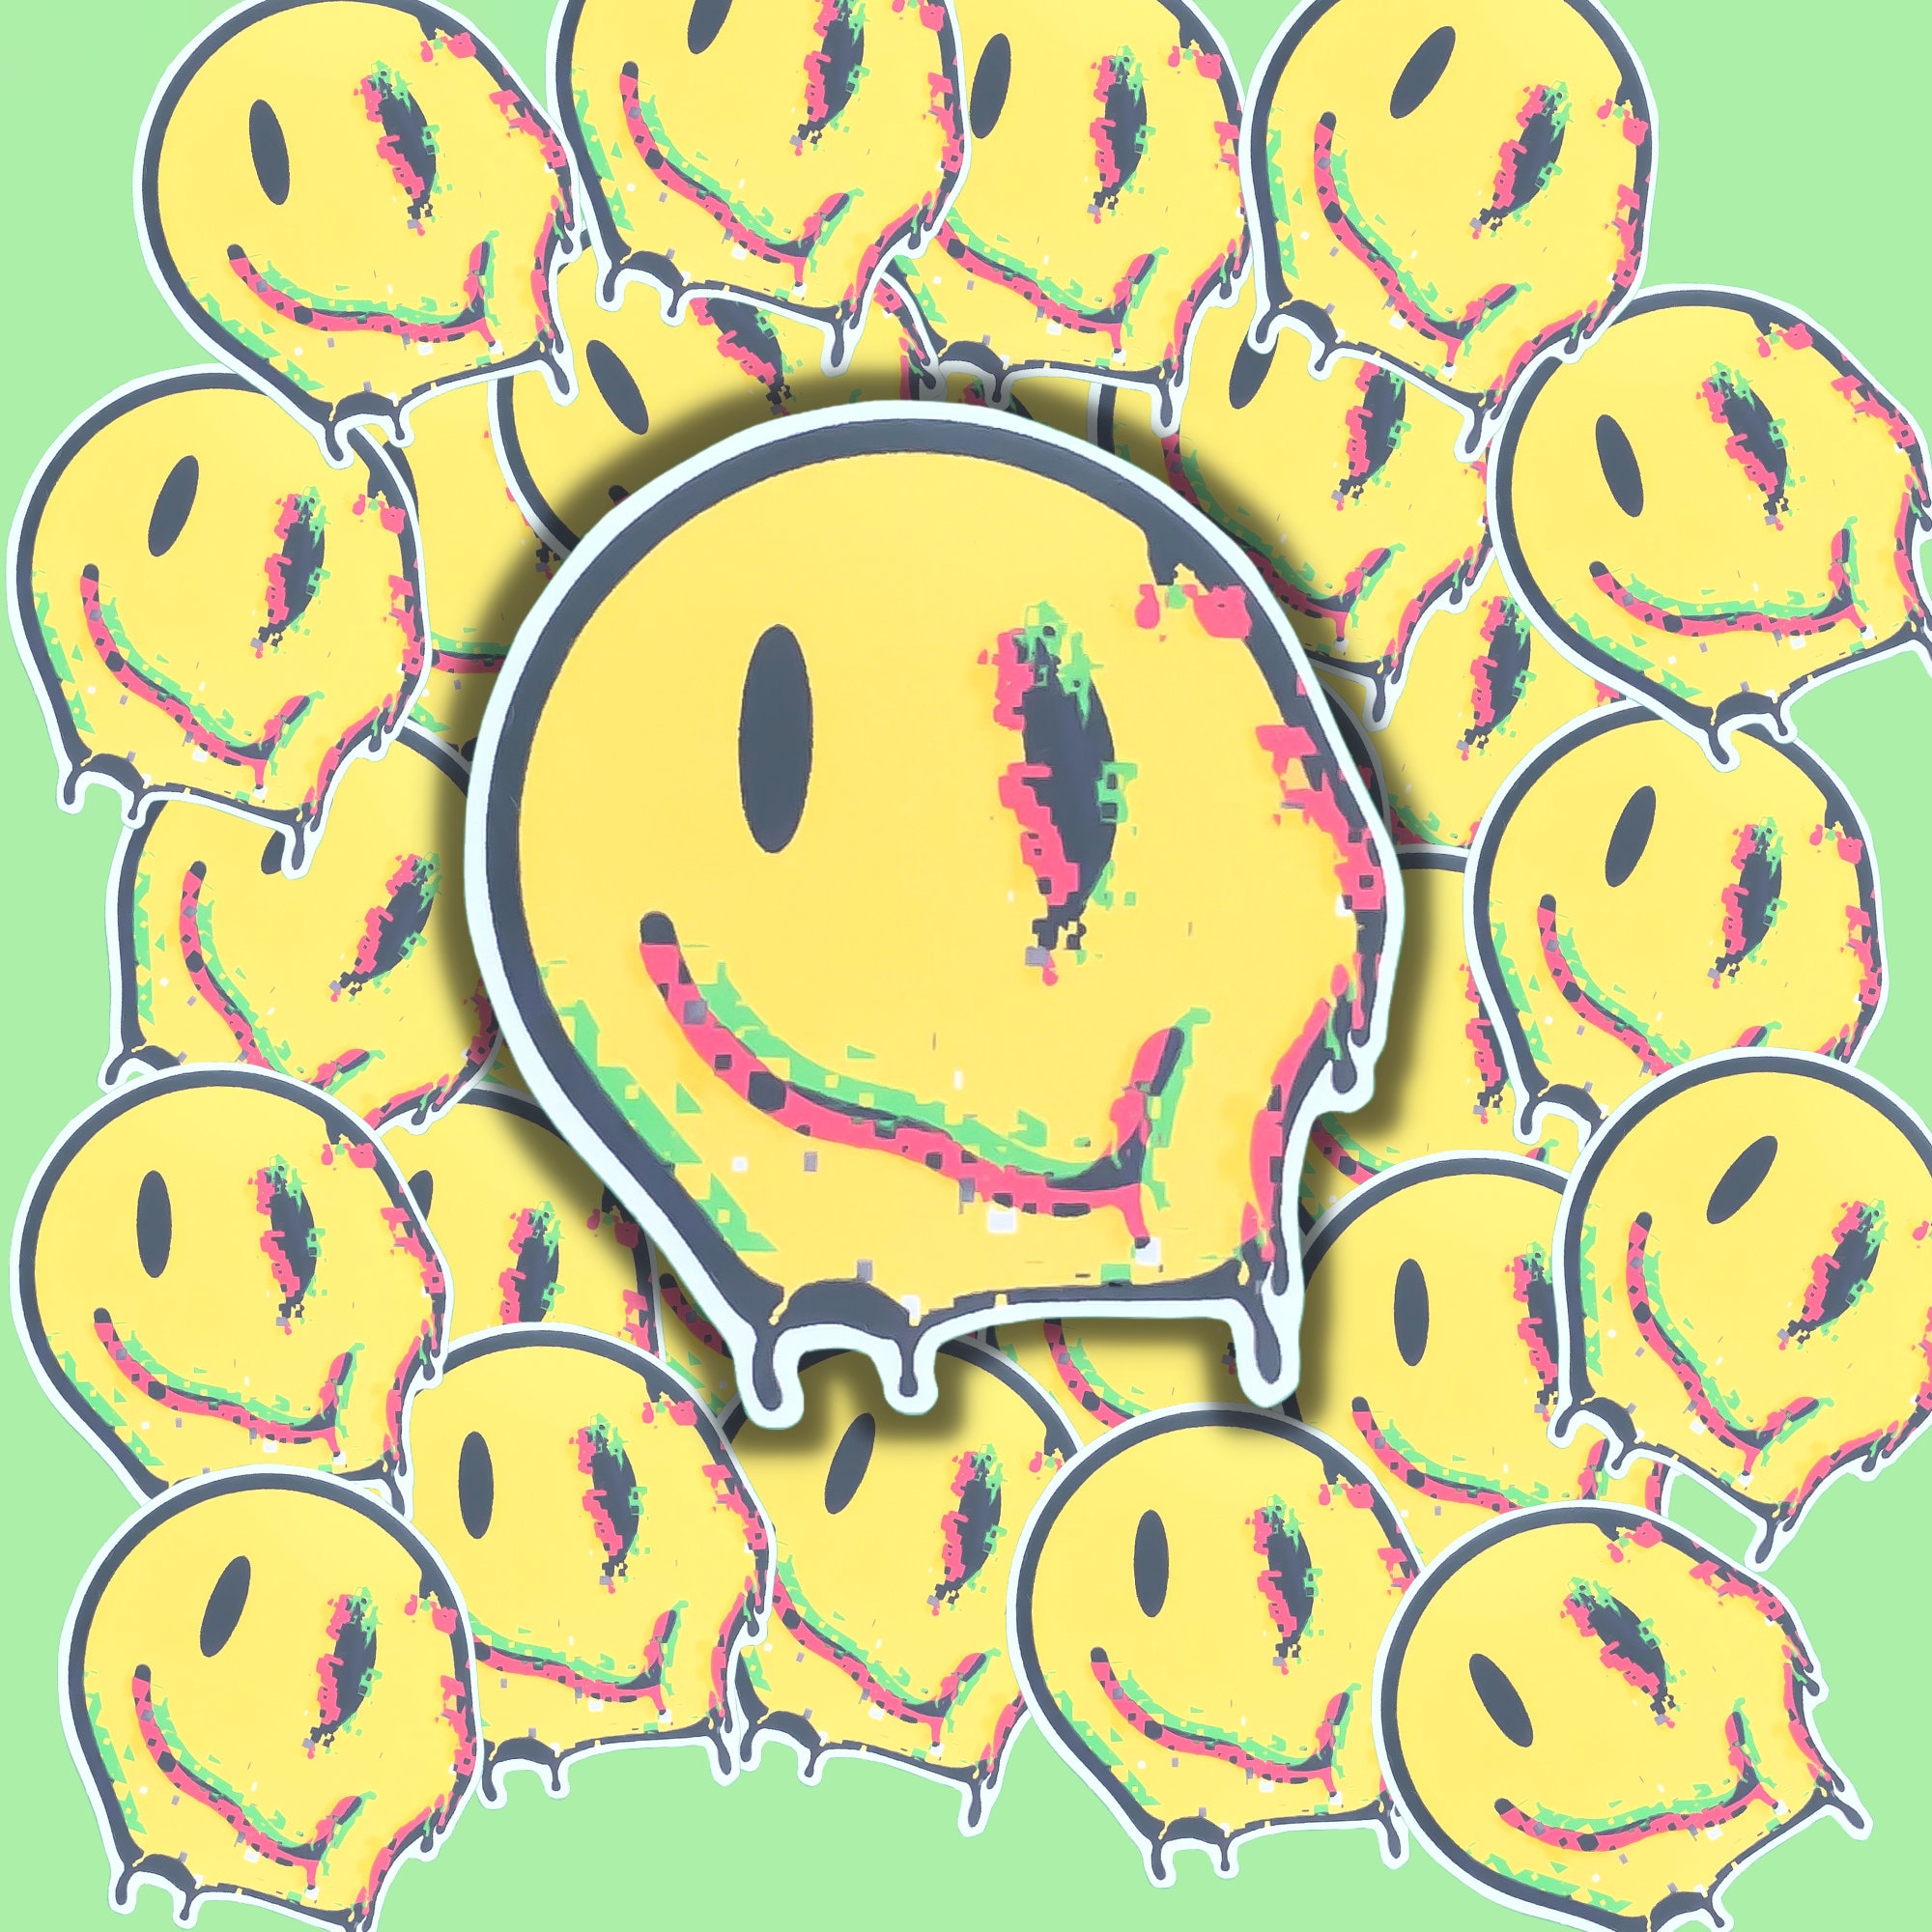 Glitchcore smiley face sticker for laptop happy face sticker | Etsy